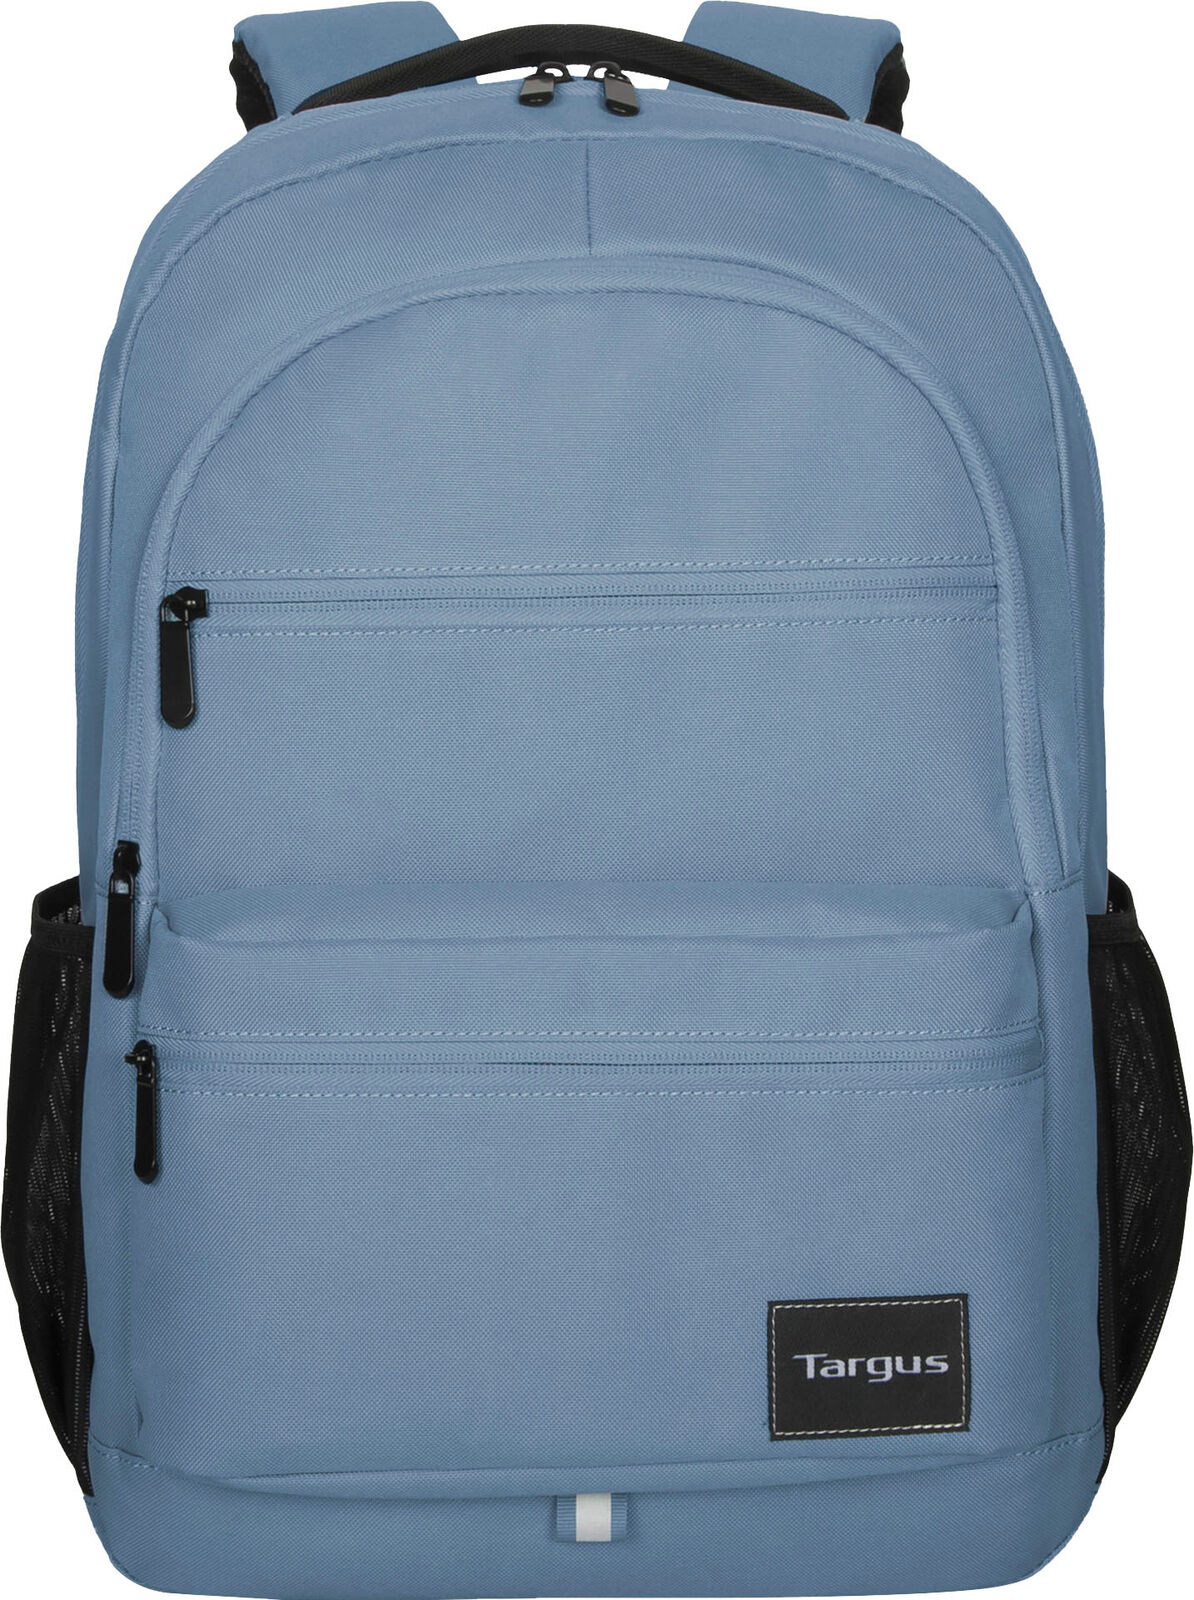 Targus - Octave III Backpack for 15.6Laptops - Blue